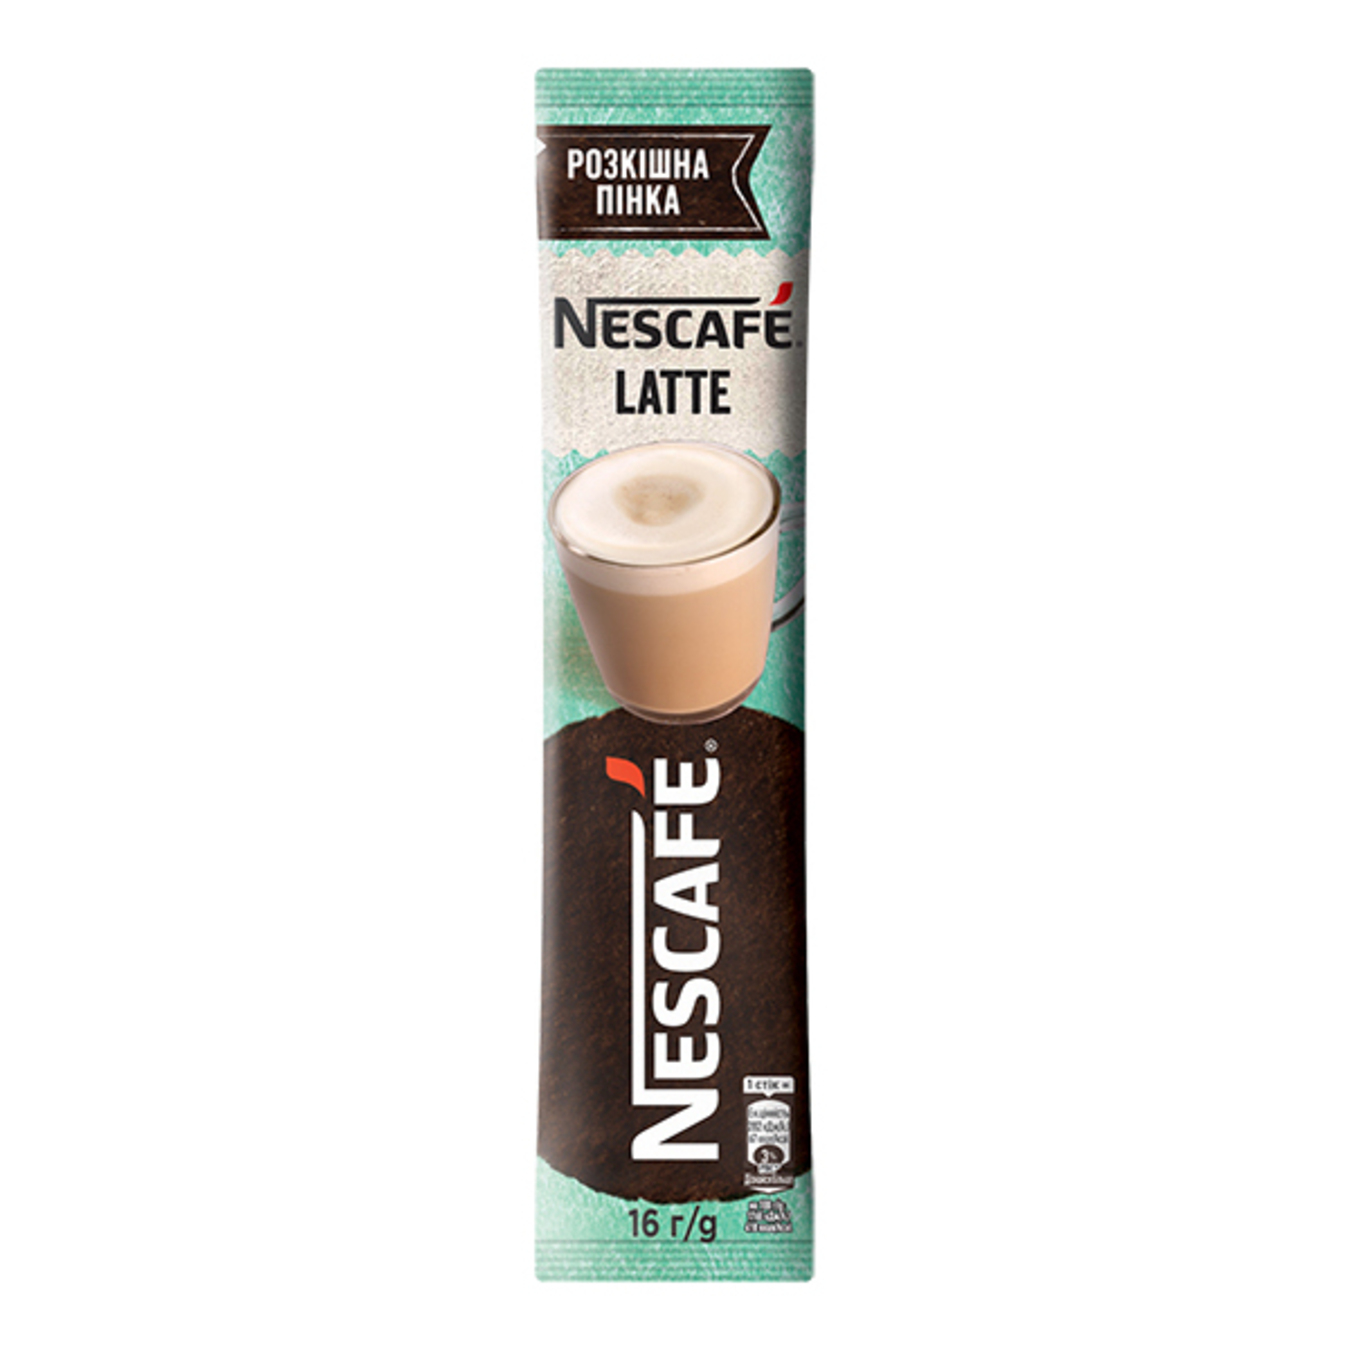 NESCAFÉ Latte instant drink with coffee stick 16g